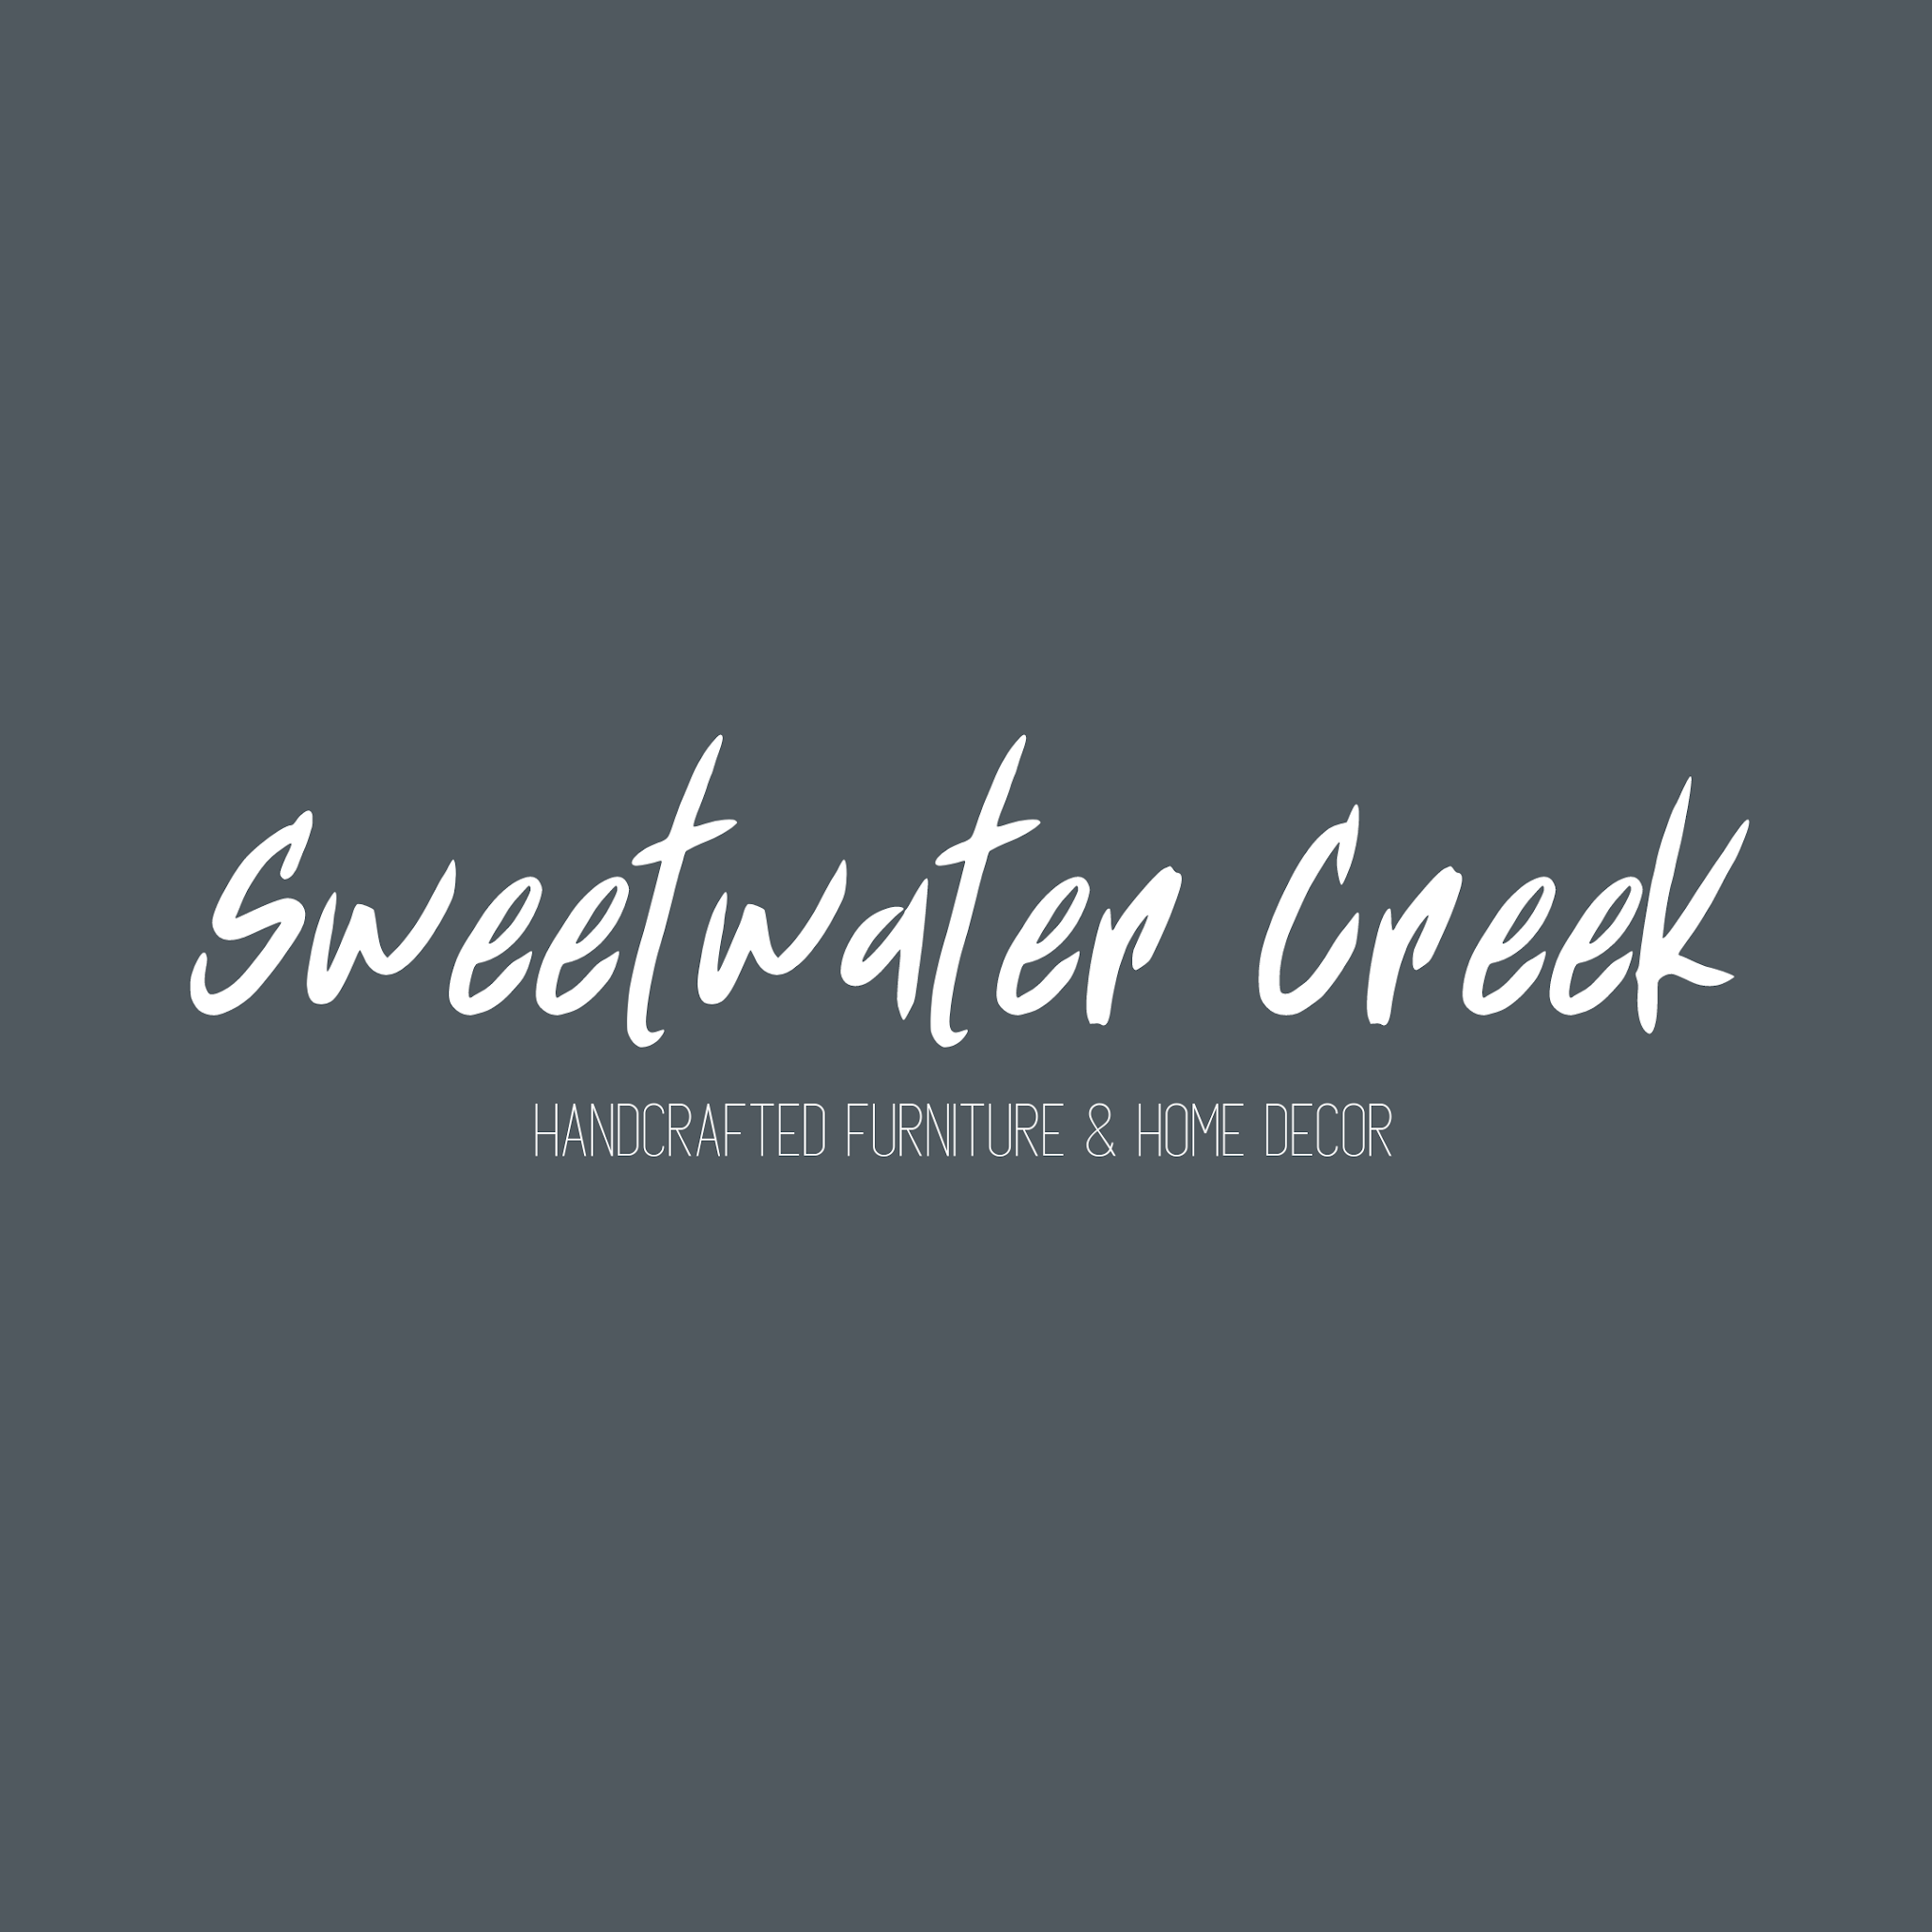 Sweetwater creek